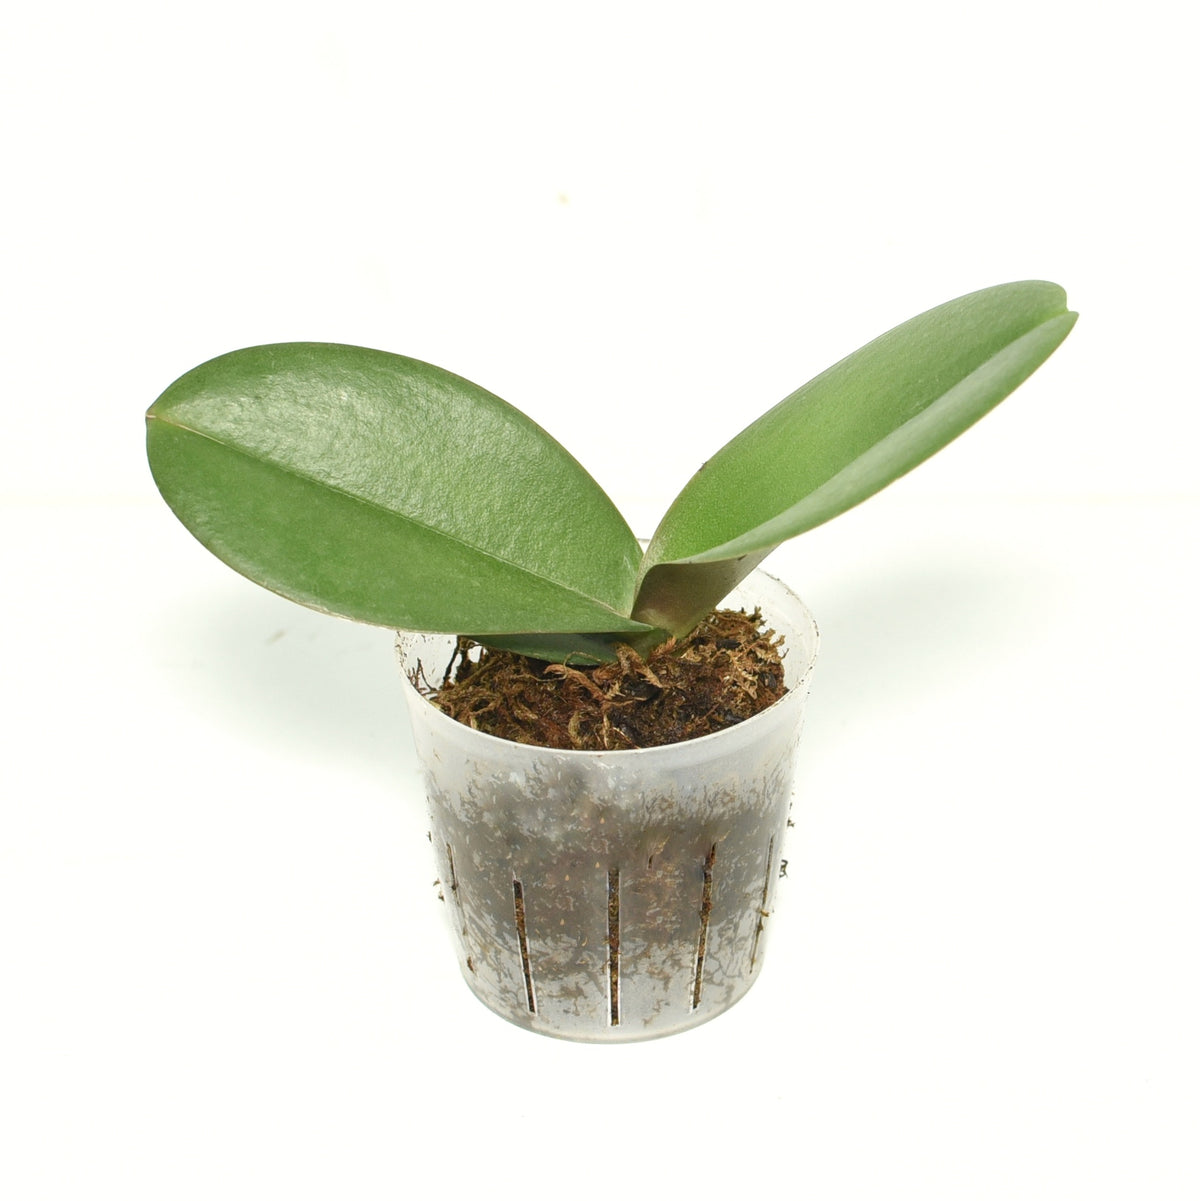 Phalaenopsis Xanadu